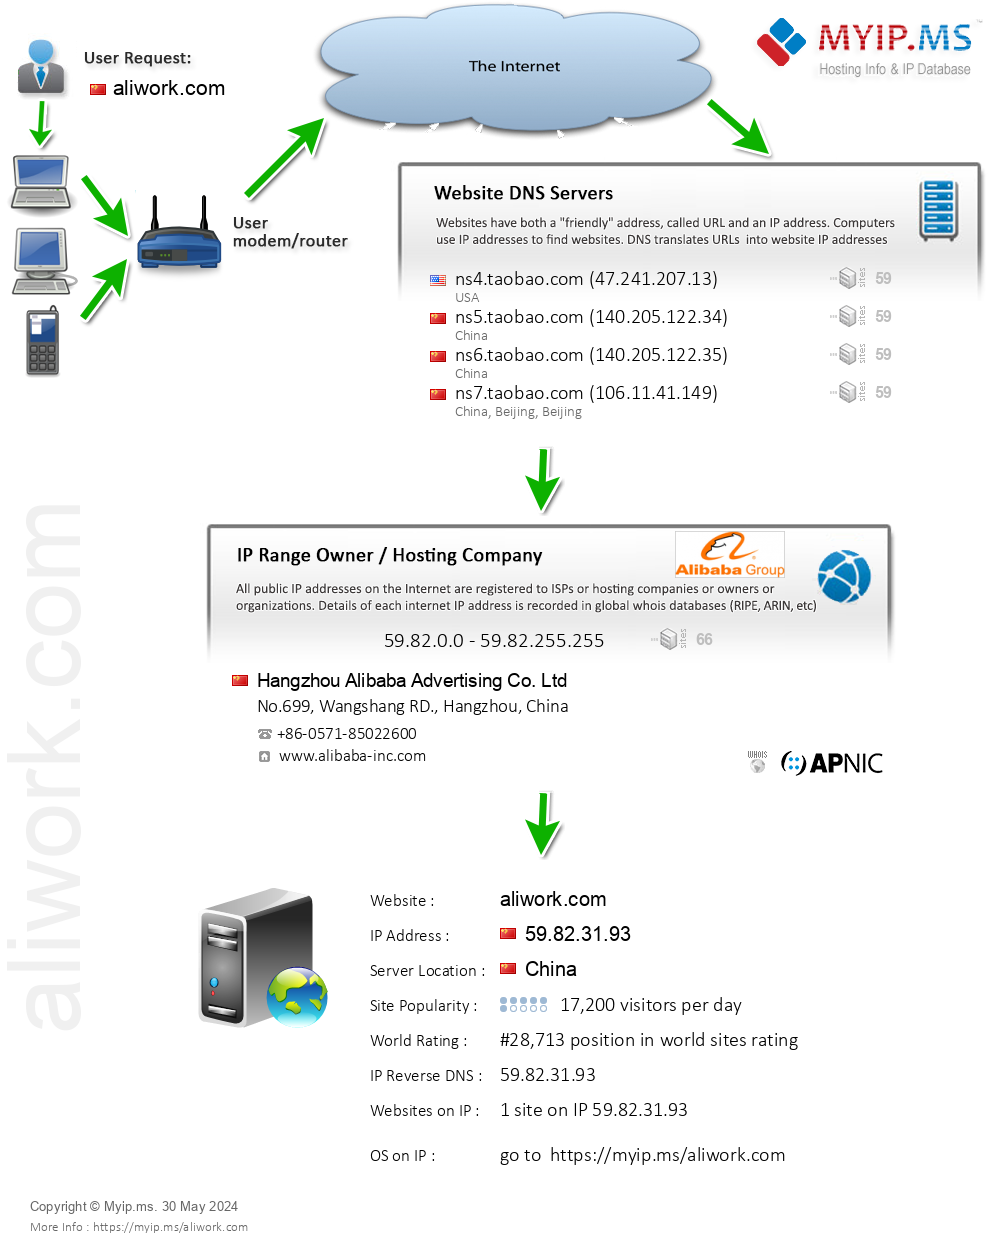 Aliwork.com - Website Hosting Visual IP Diagram